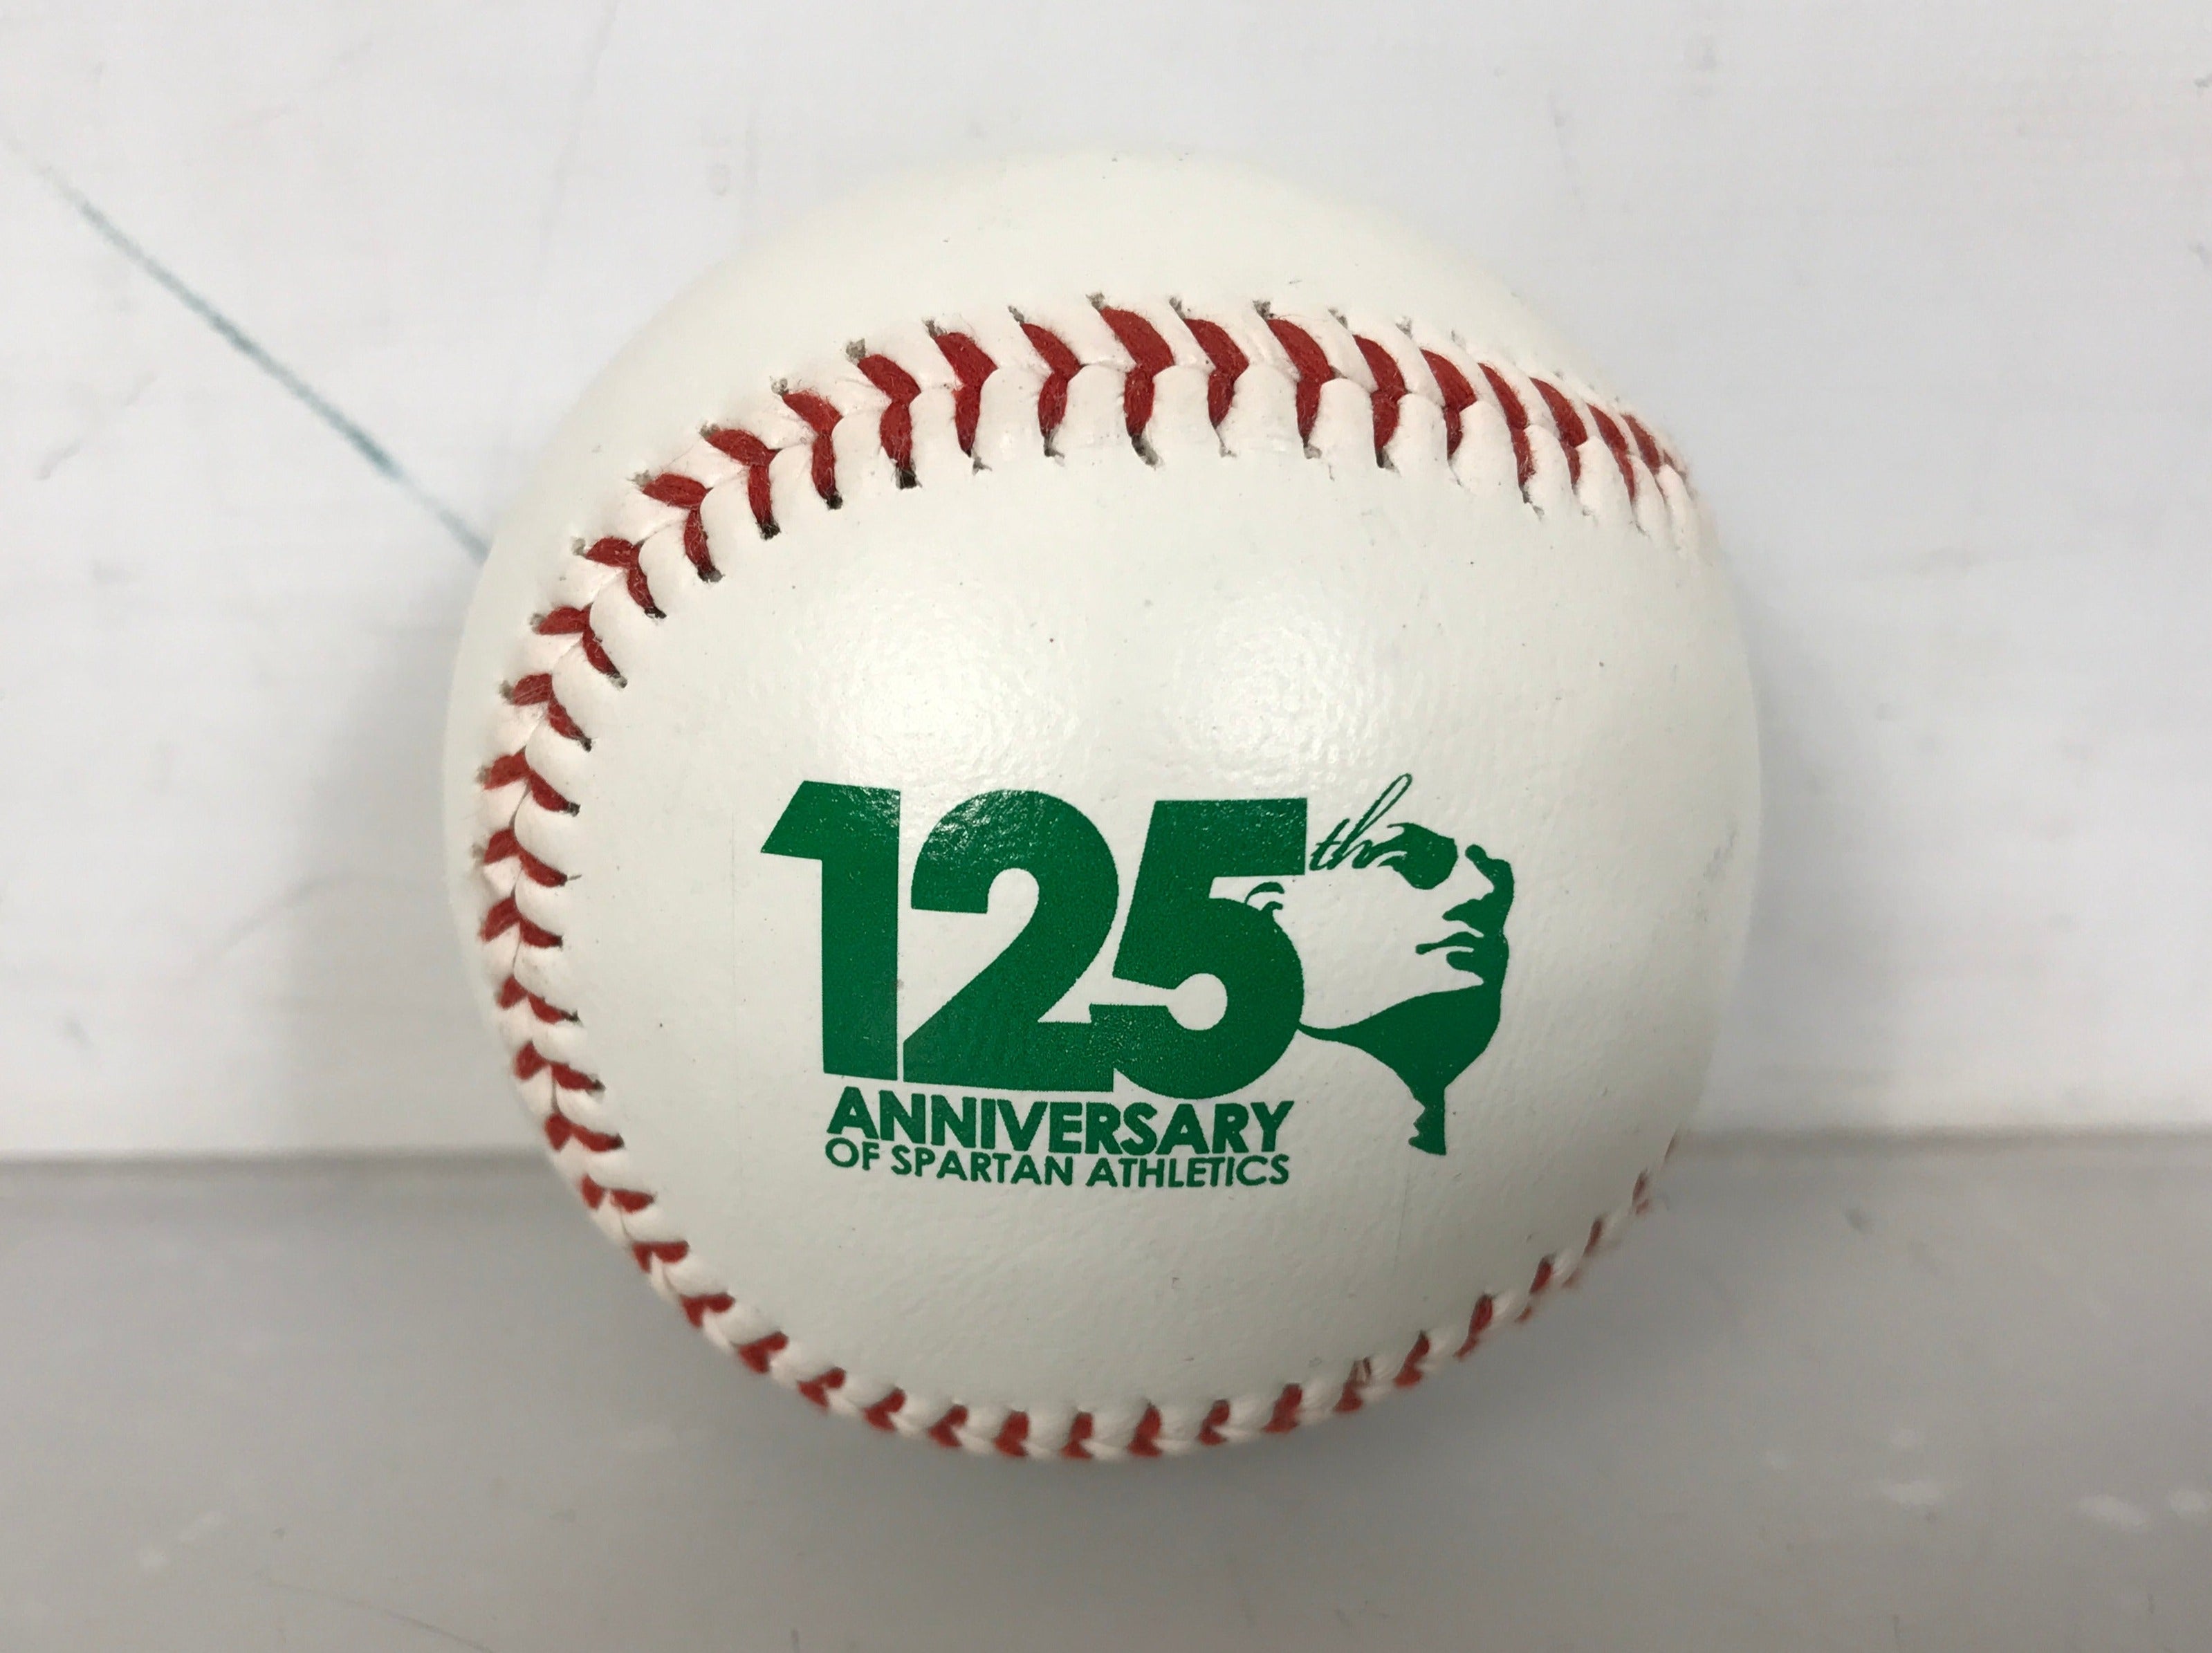 125th Anniversary of Spartan Athletics Commemorative Baseball